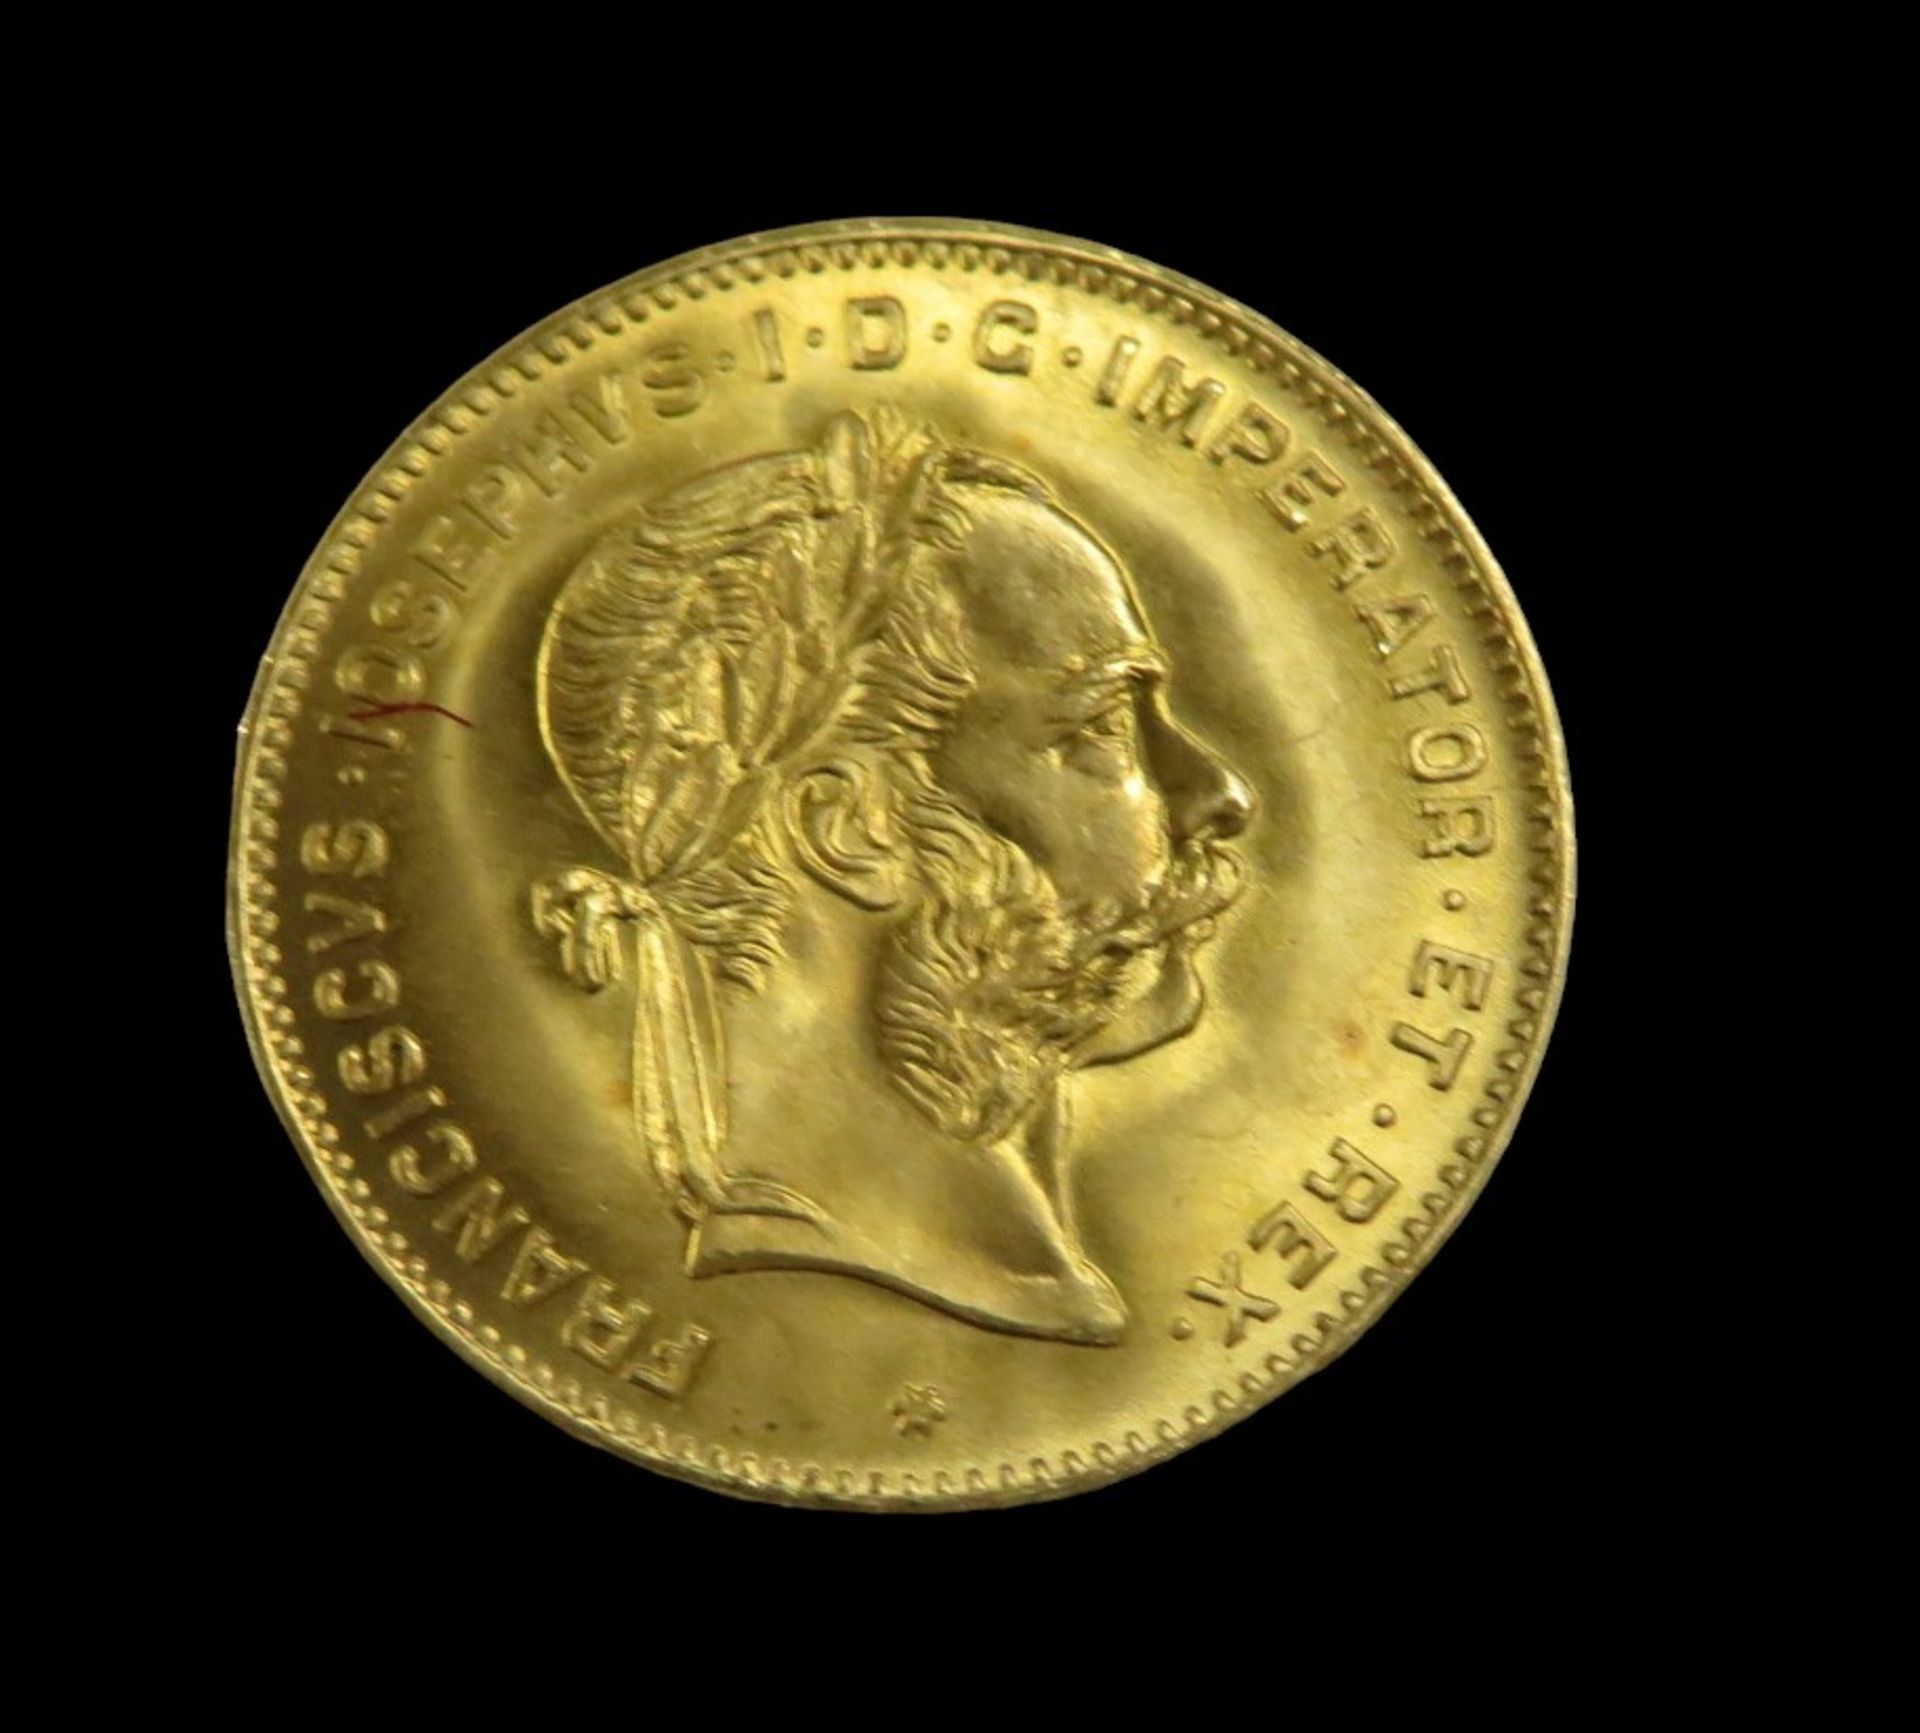 Goldmünze, Österreich, 4 Florin/Goldgulden, Franz Joseph I, 1892, Gold 900/000, 3,23 g, d 1,9 cm.